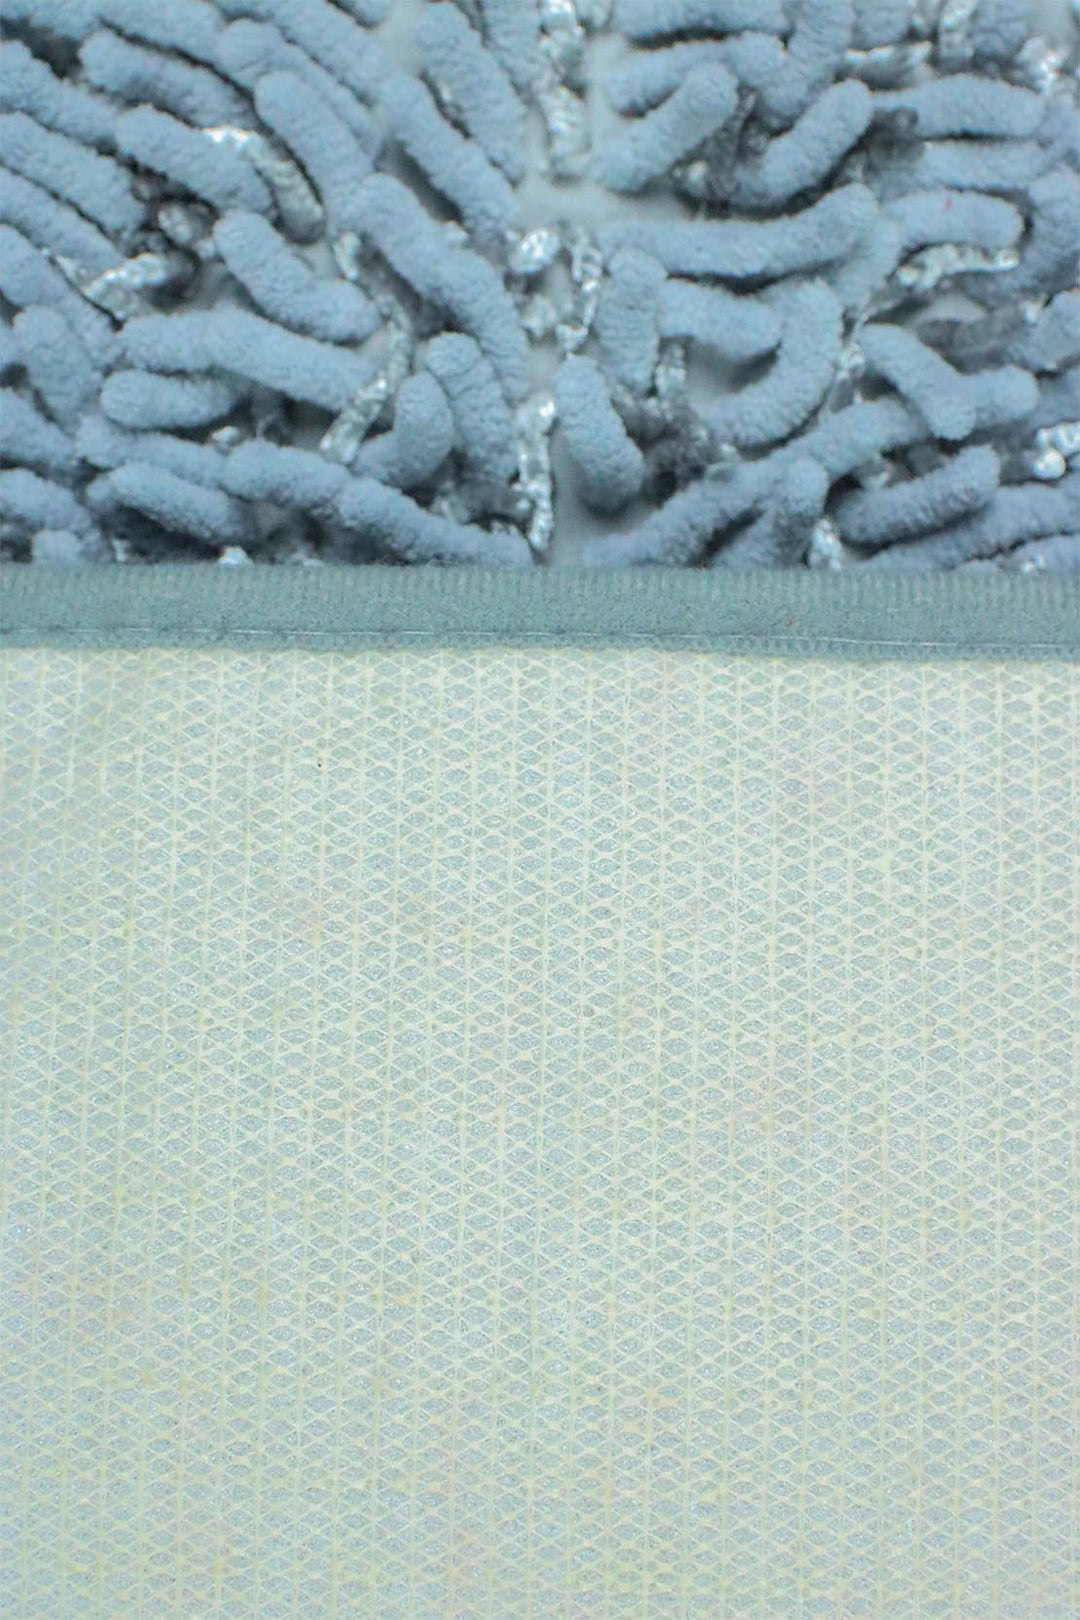 Micro Fiber Bath Mat, Gray - V Surfaces